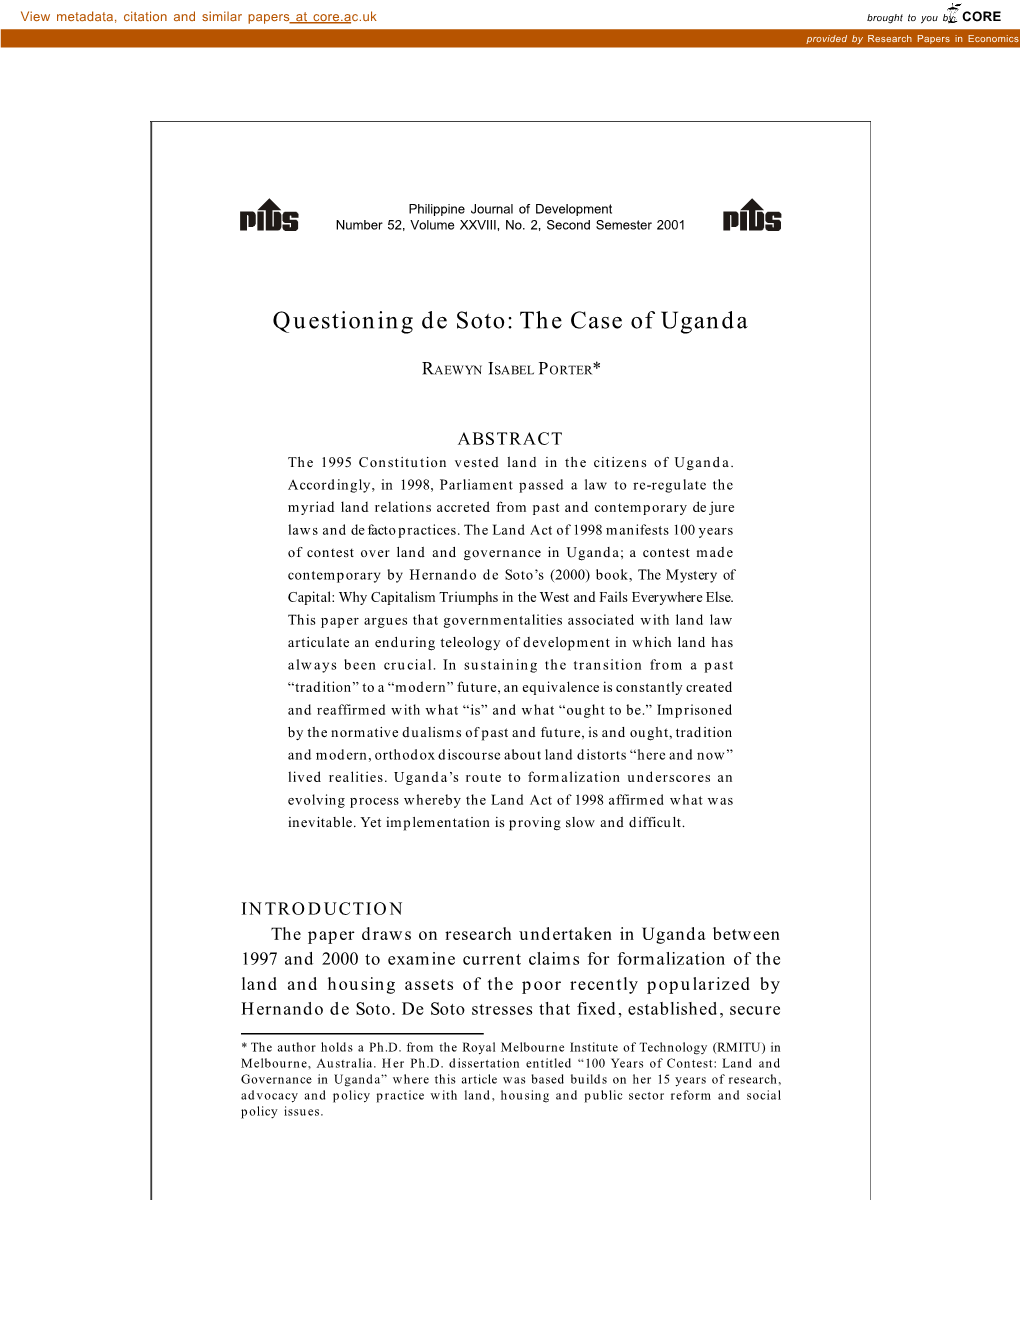 Questioning De Soto: the Case of Uganda